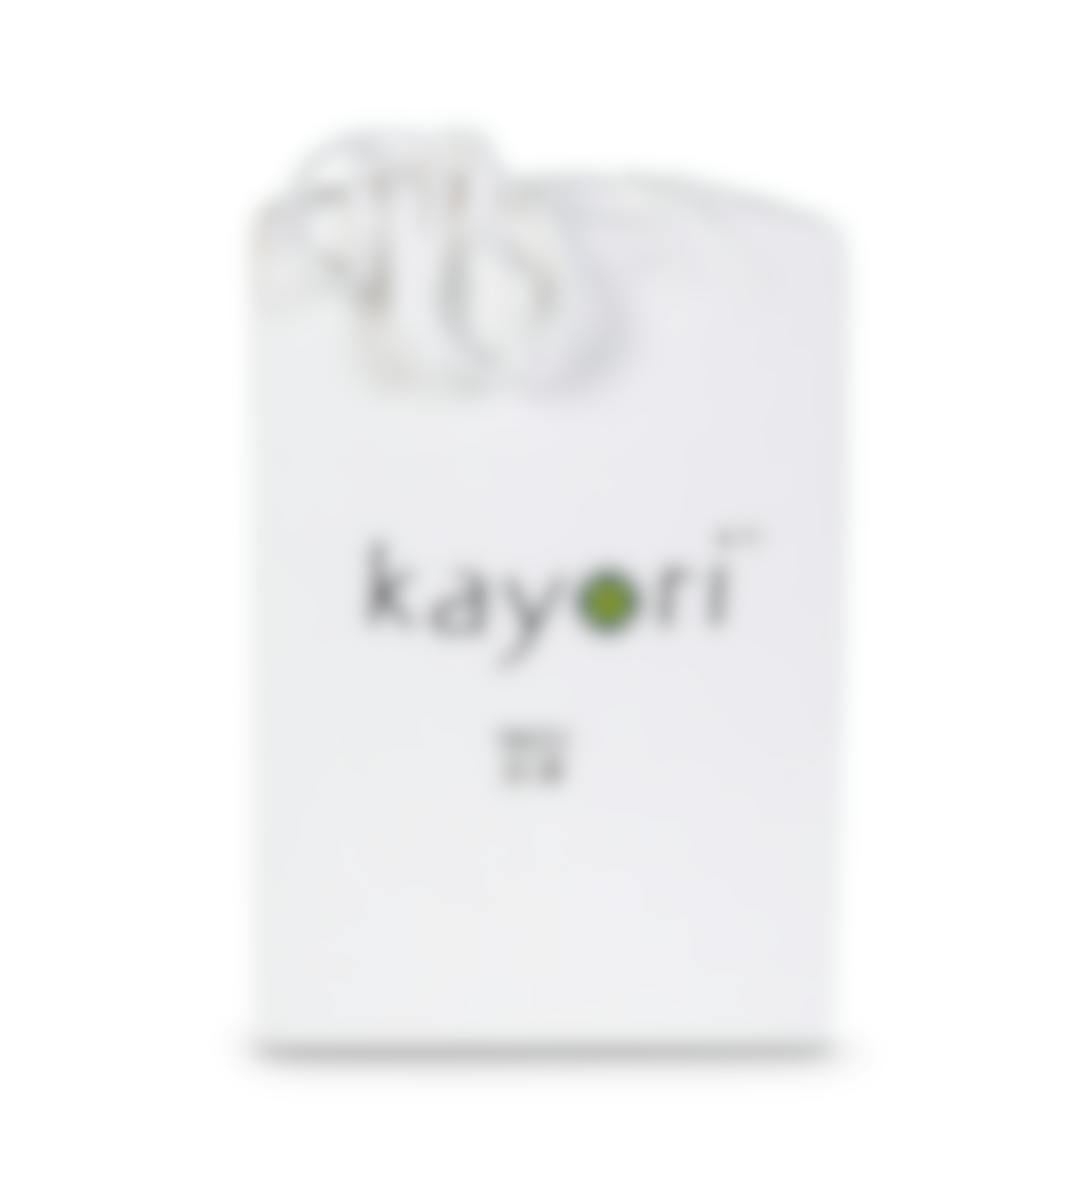 Kayori split matrasbeschermer katoenjersey (hoek 40 cm) lits-jumeaux